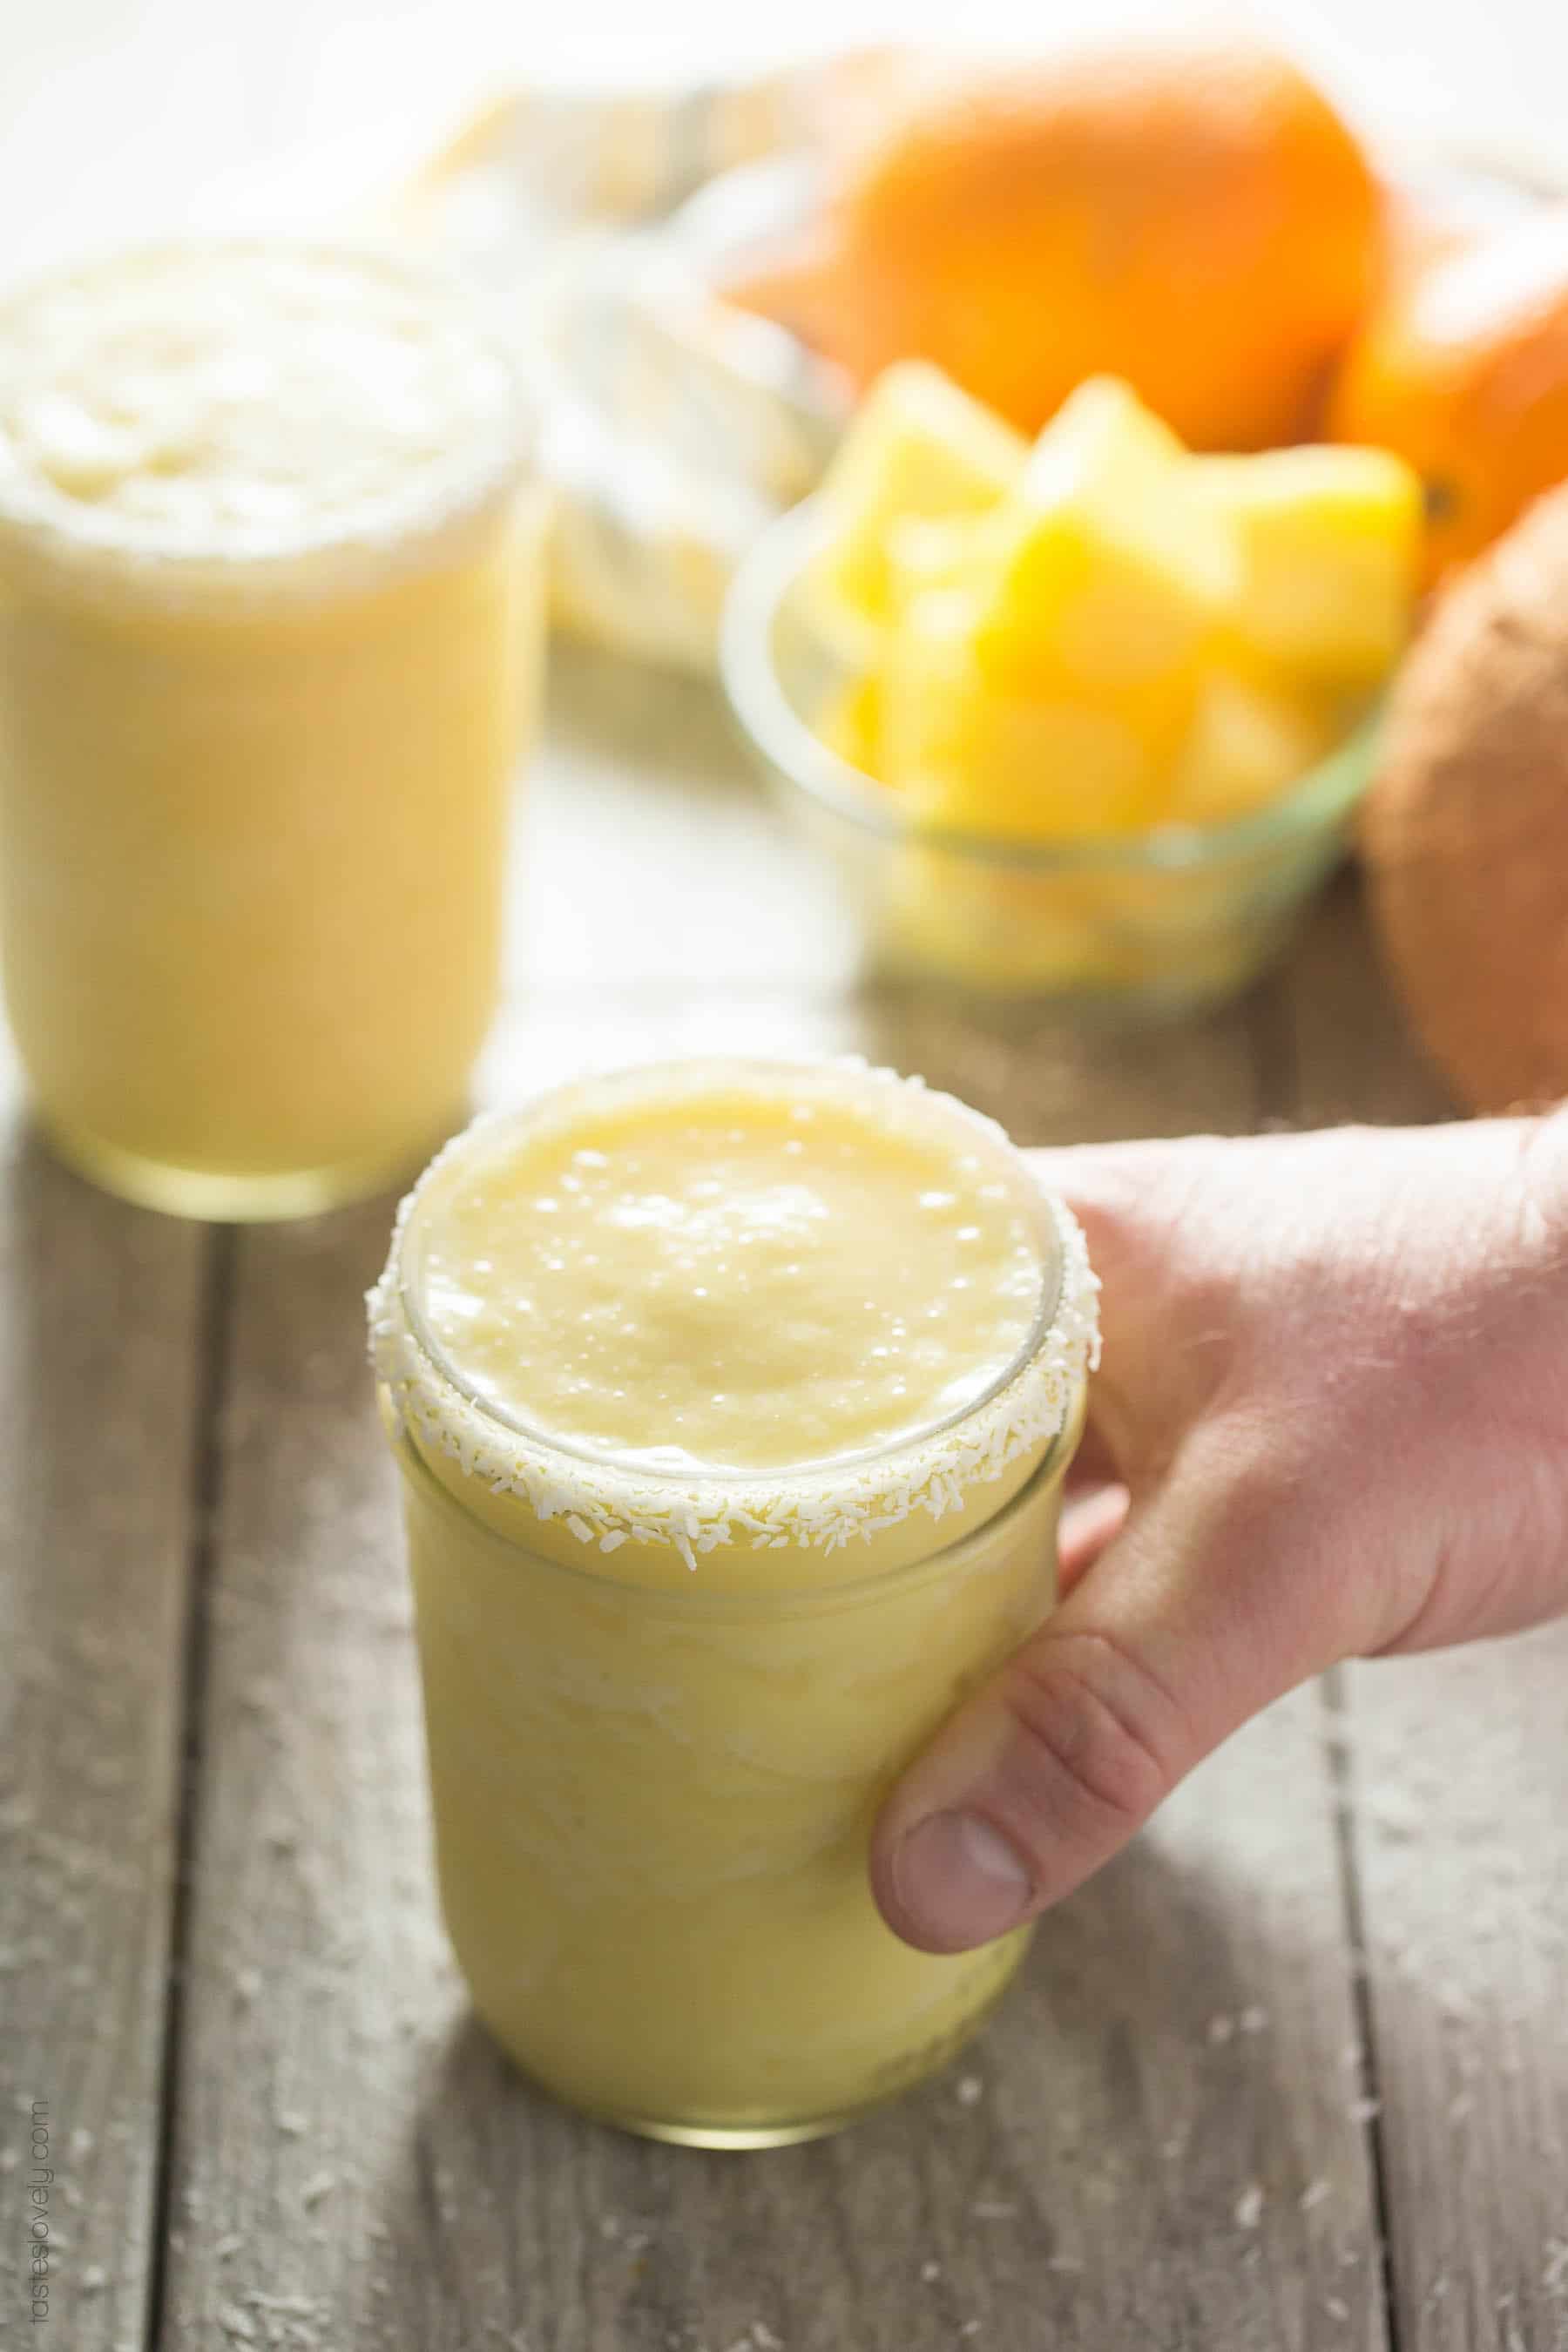 Tropical Pineapple Orange Smoothie - citrusy and bright breakfast smoothie (paleo, gluten free, dairy free, Whole30, vegan)